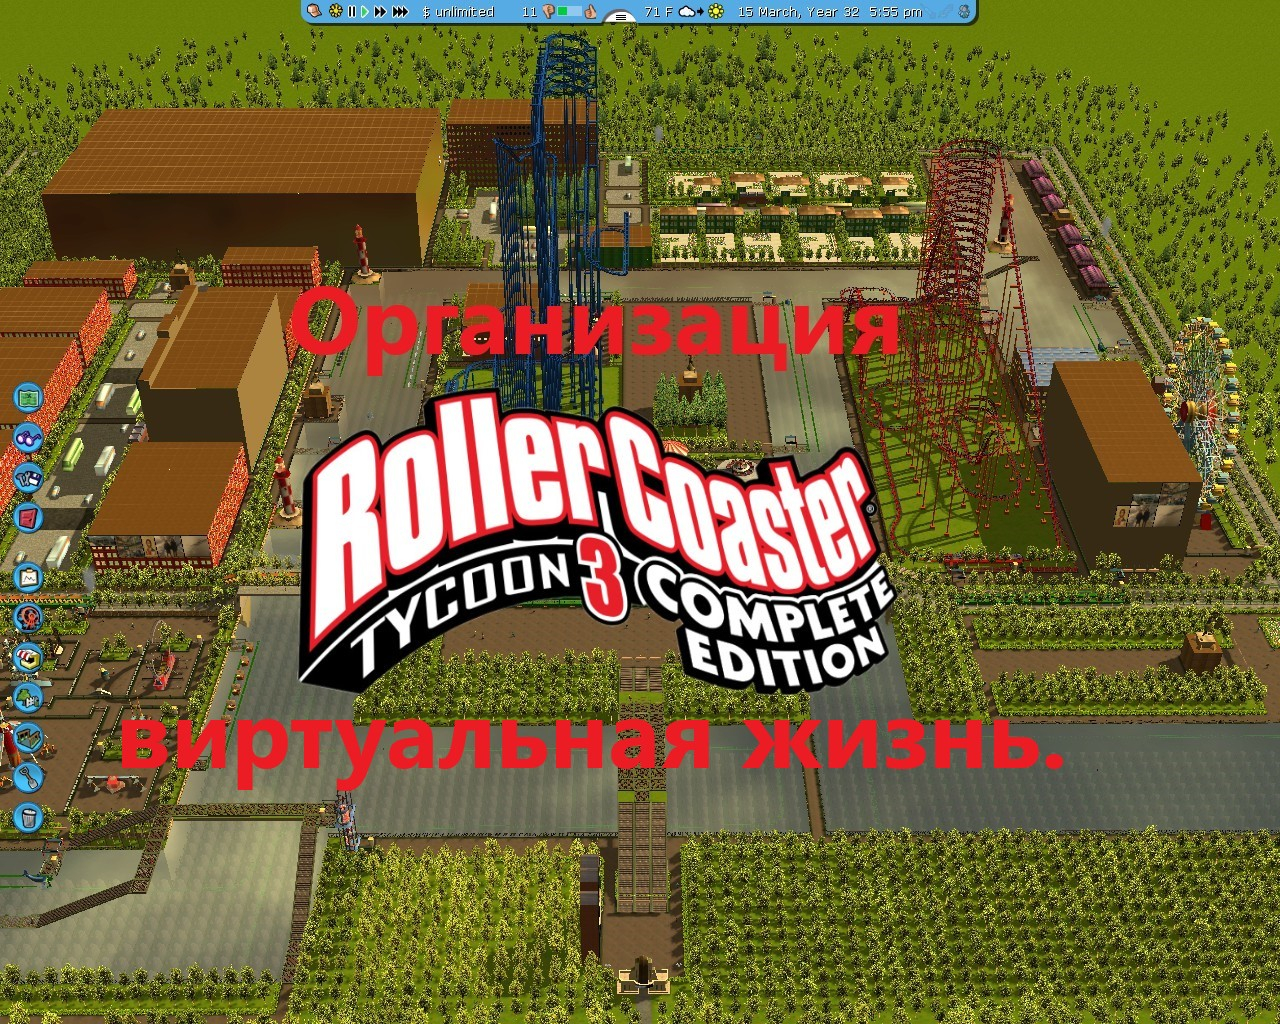 Организация RollerCoaster Tycoon 3 Complete Edition виртуальная жизнь.